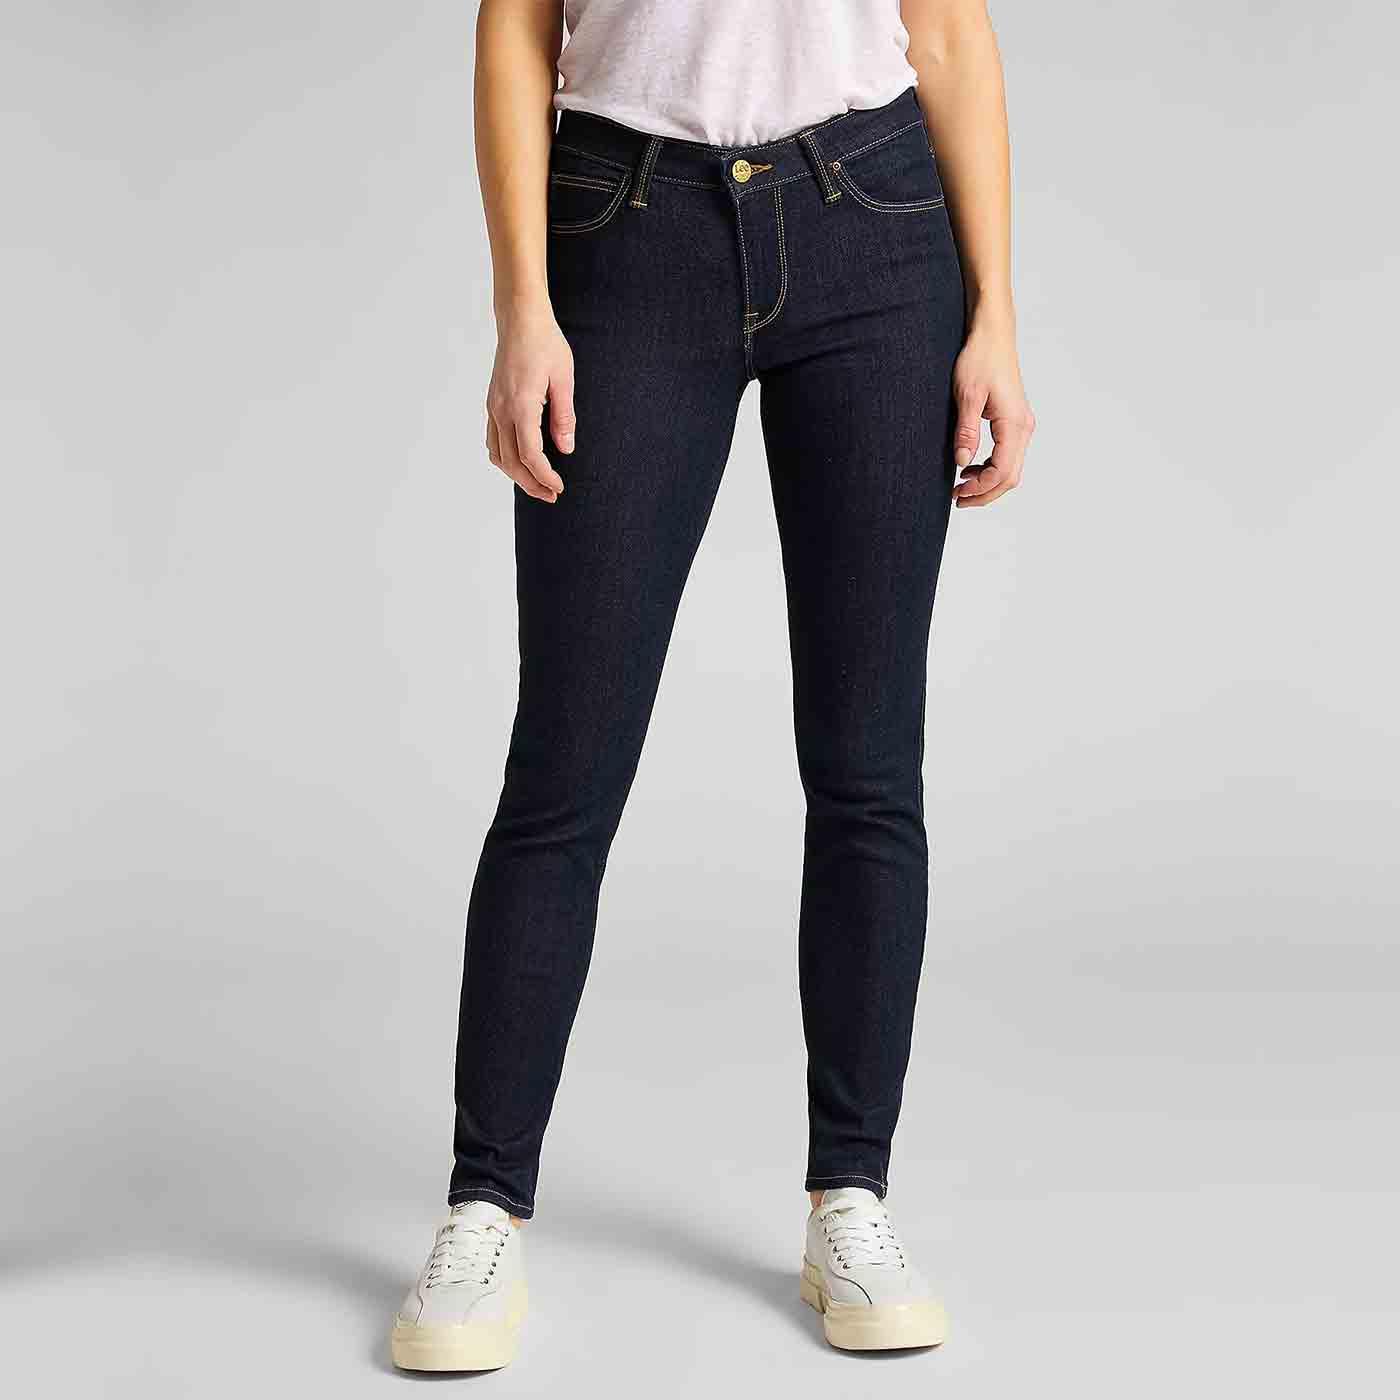 Scarlett Lee Retro Mod Skinny Denim Jeans Rinse